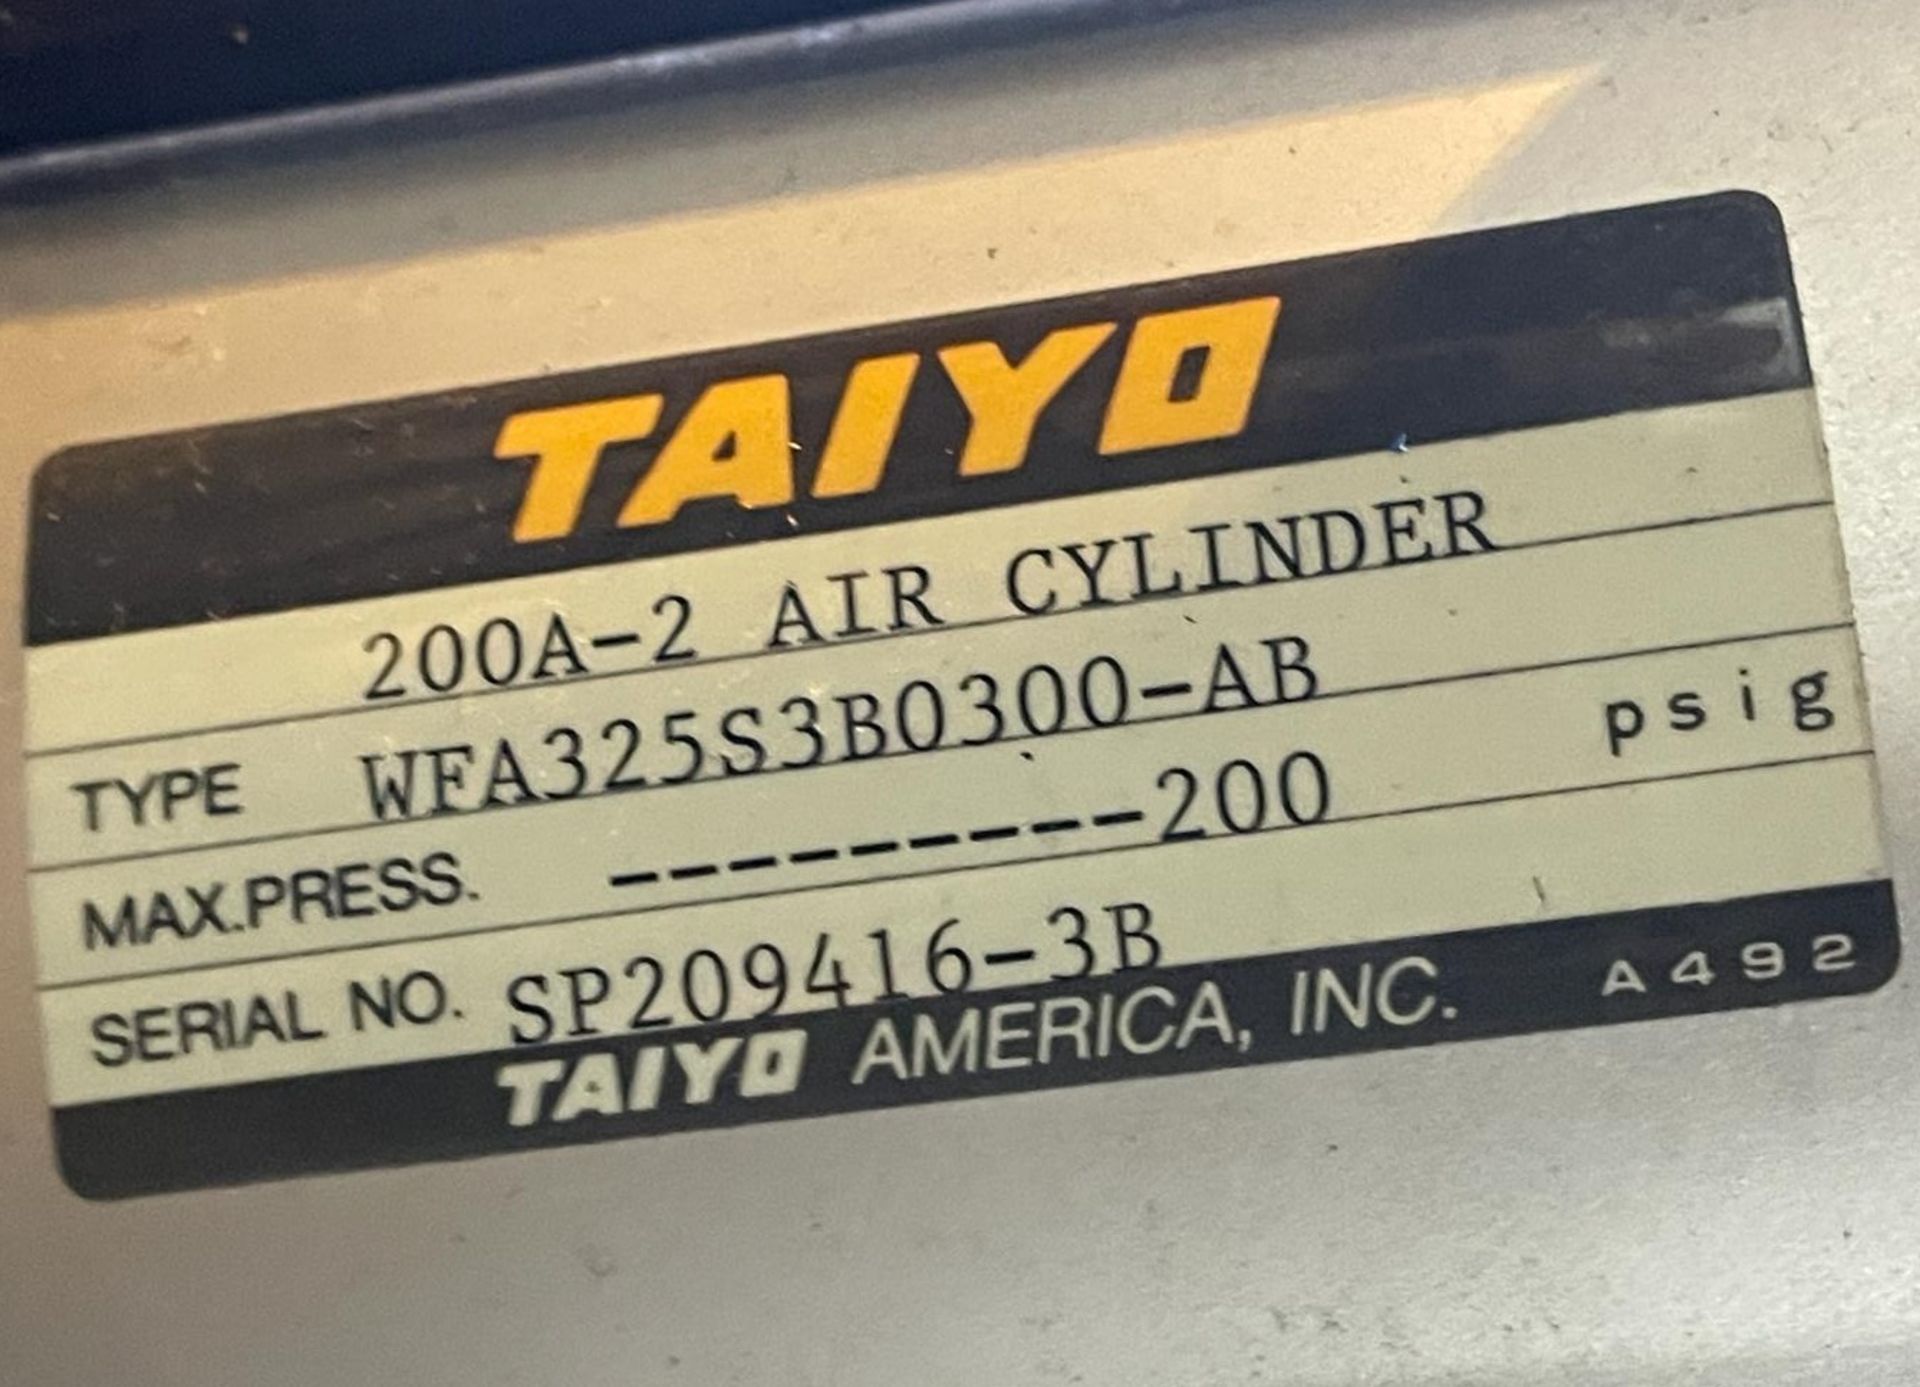 1 x Taiyo 200A-2 Air Cylinder - Type WFA325S3B0300-AB - Image 2 of 13